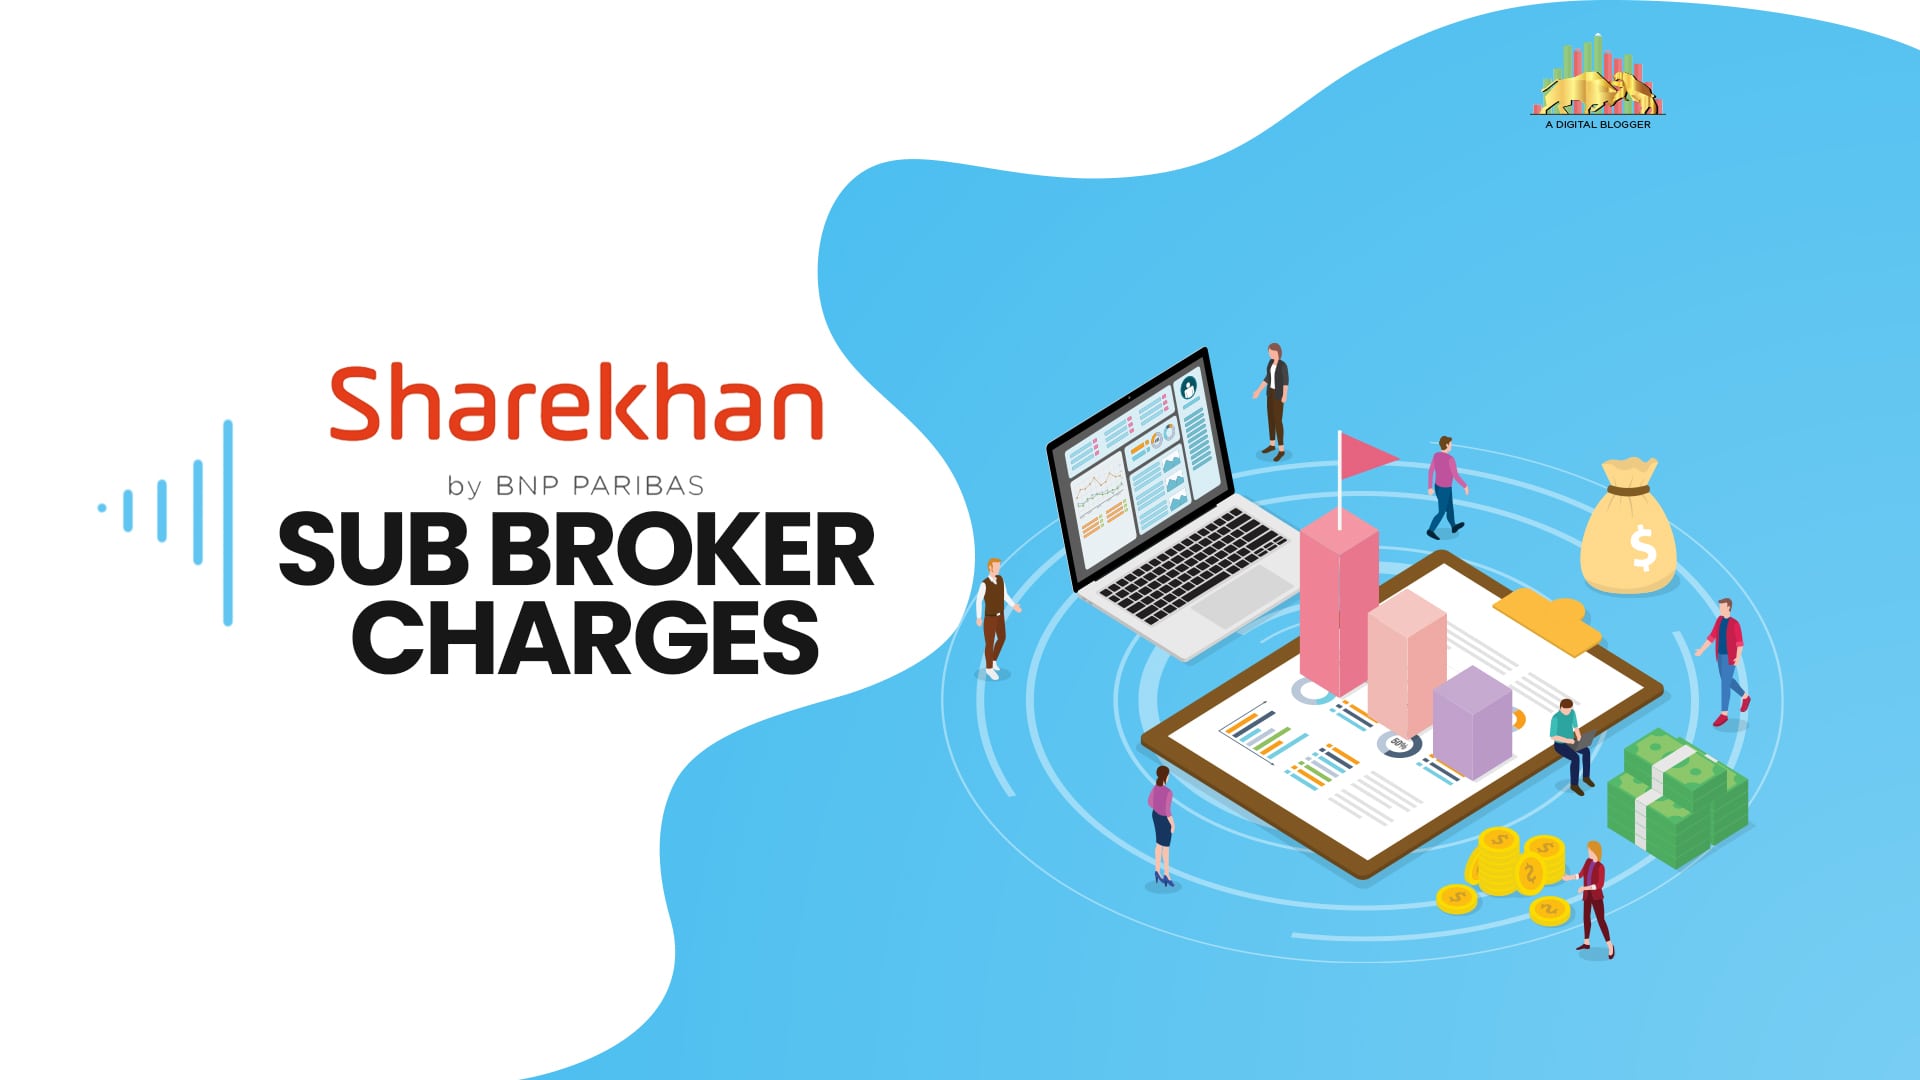 Sharekhan Sub broker charges details